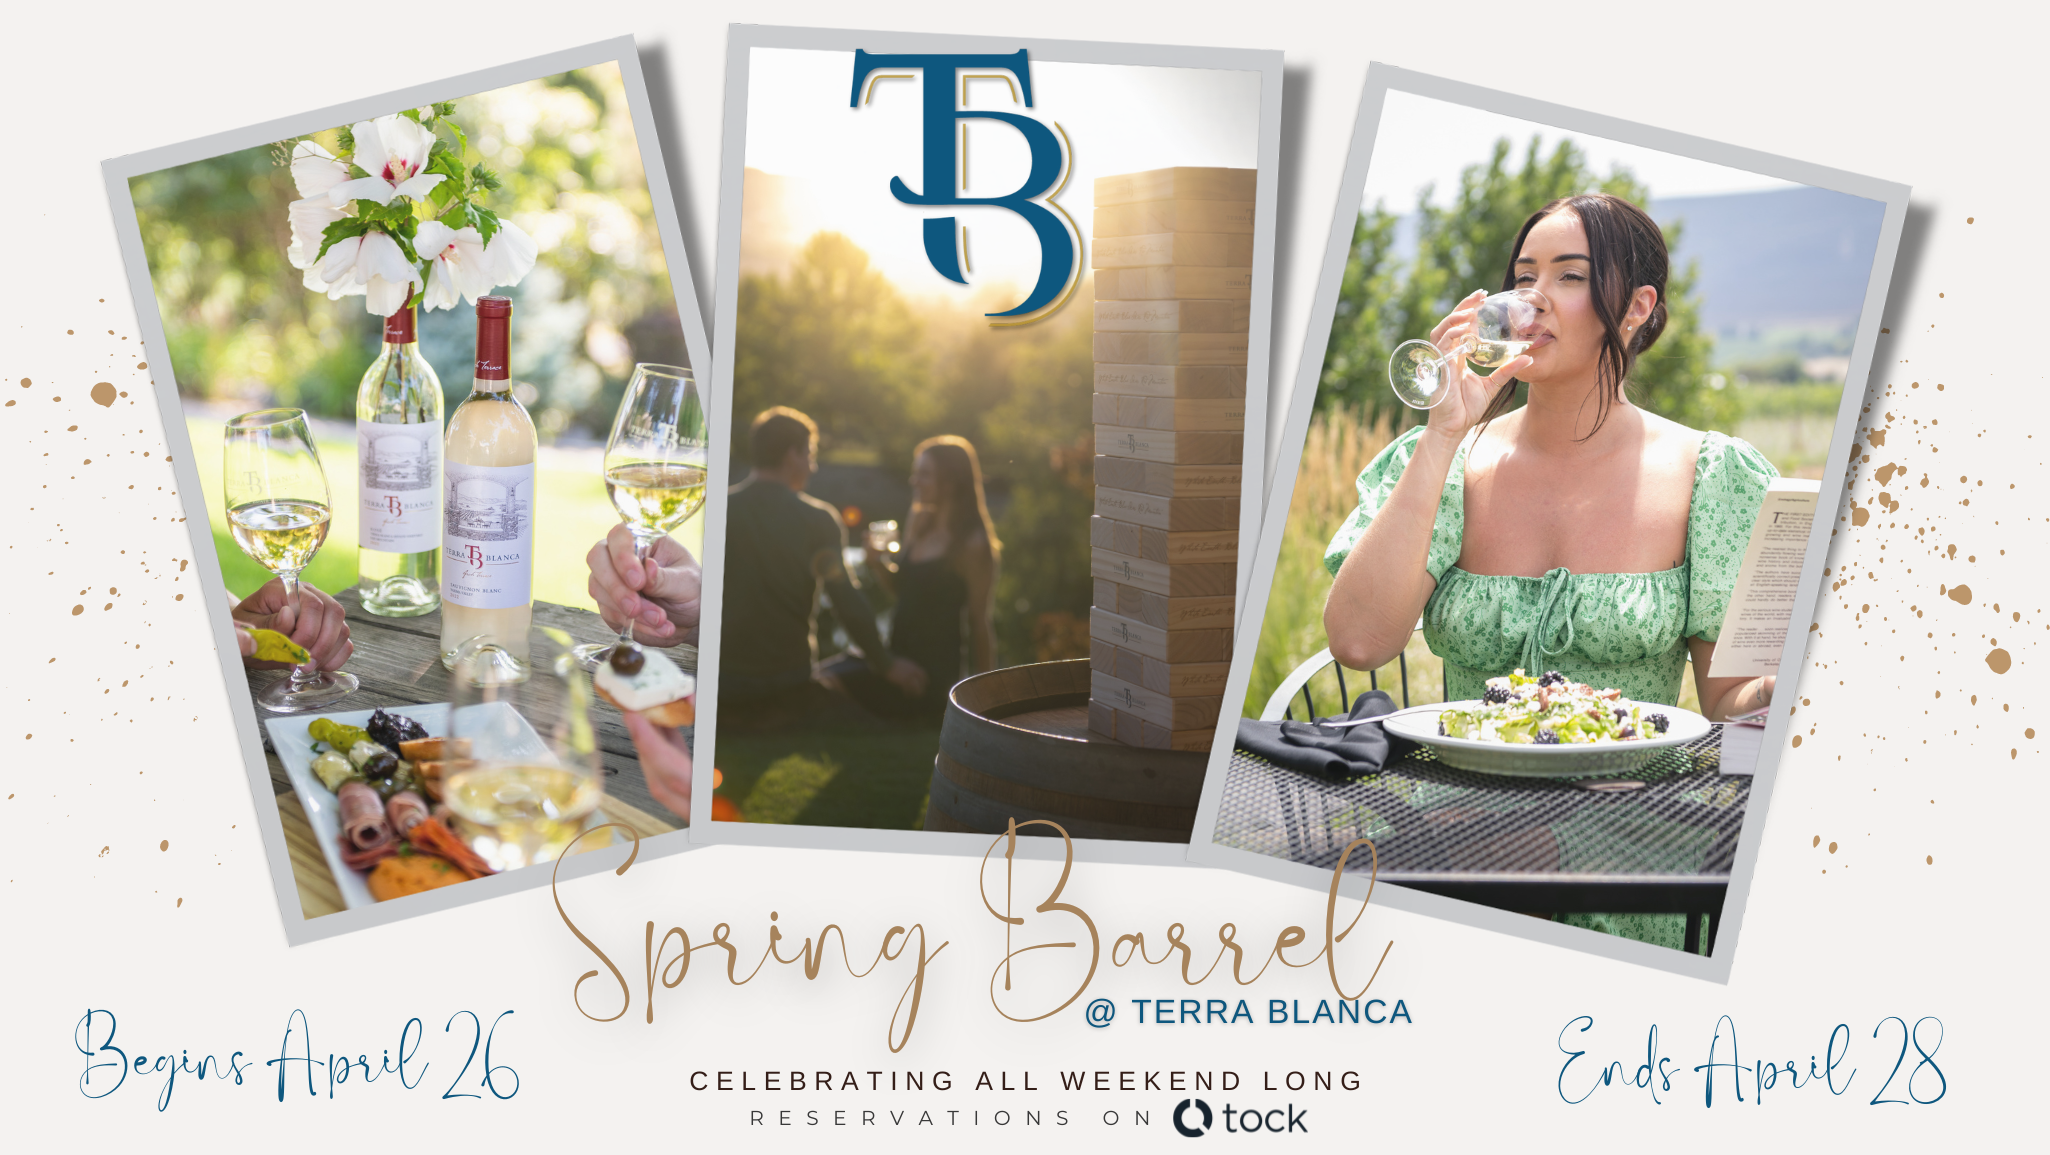 Spring Barrel @ Terra Blanca Winery